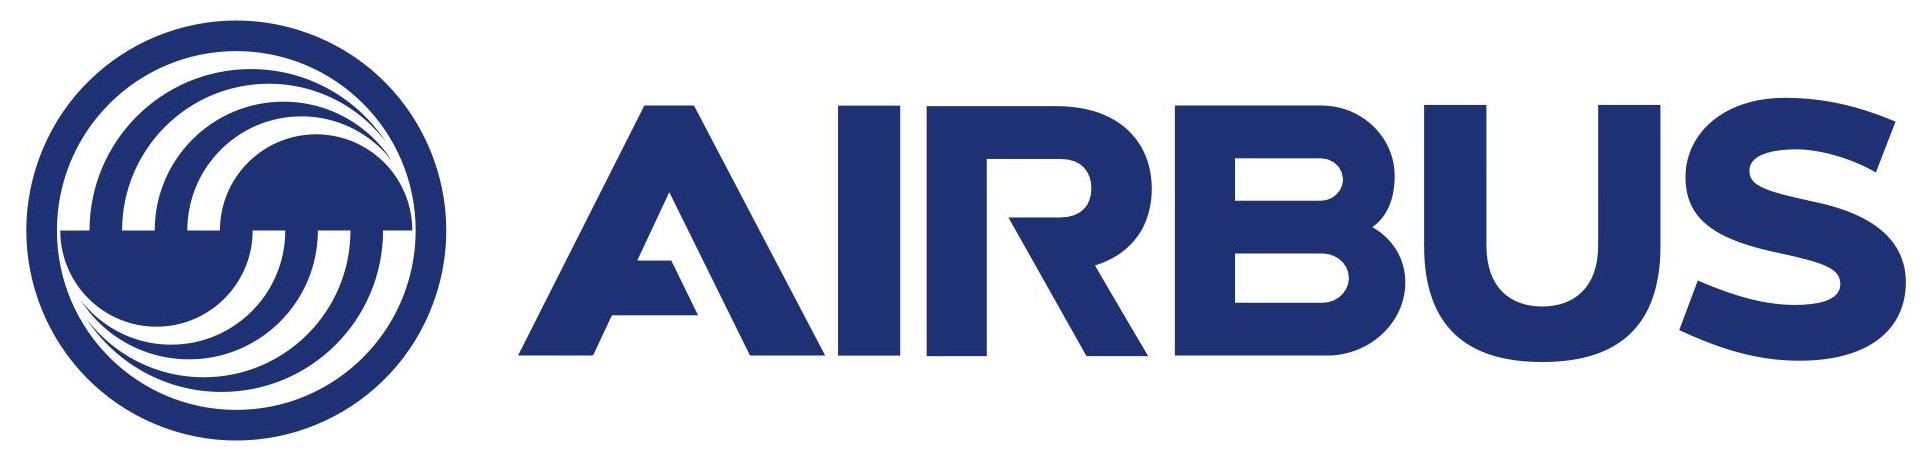 Airbus Logo Vector PNG - 97655